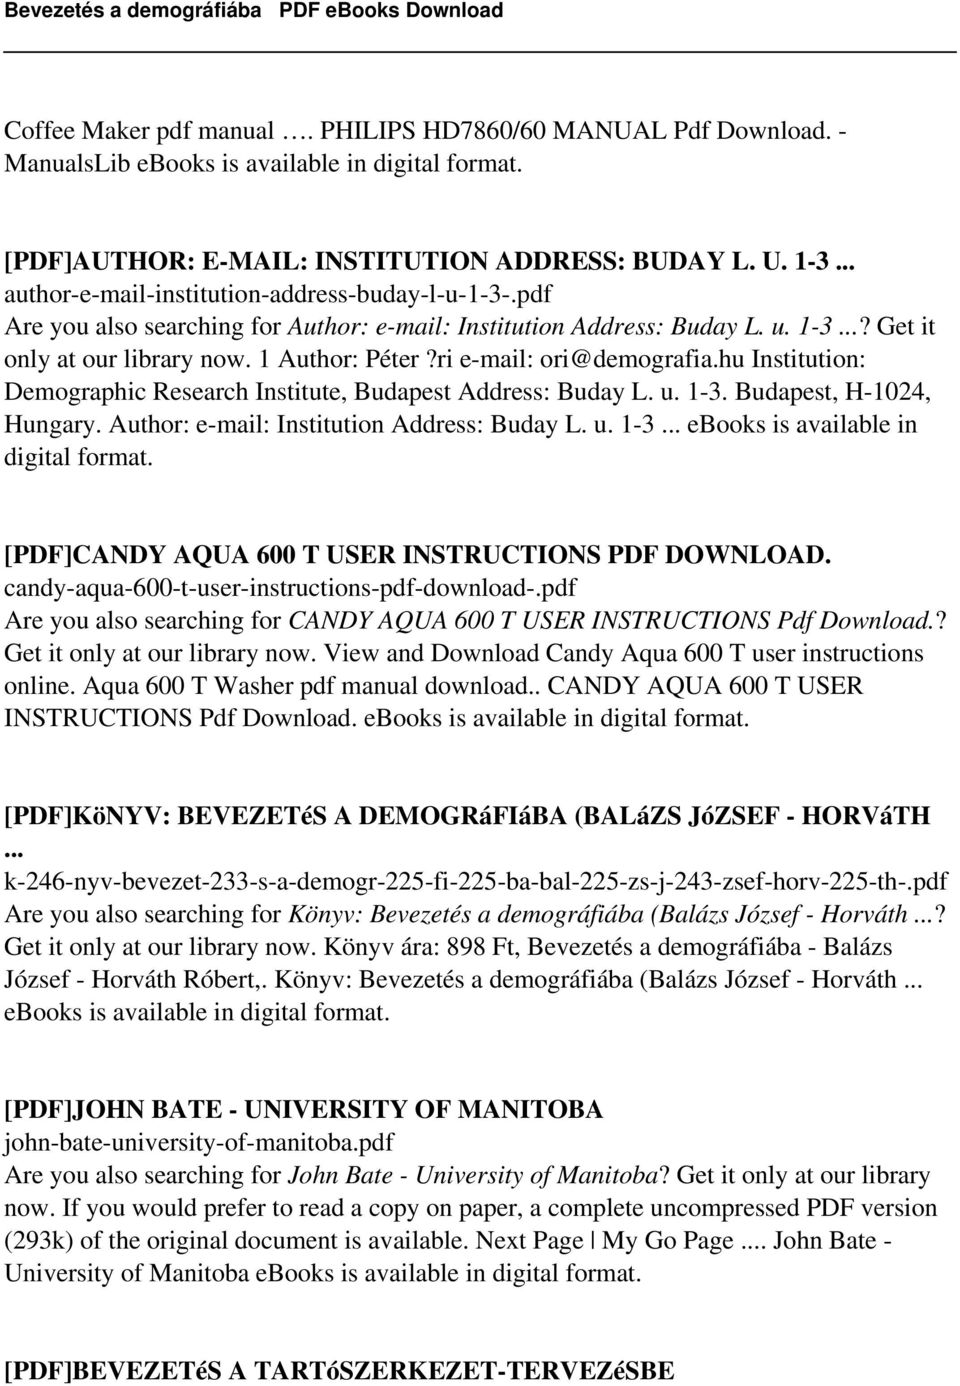 ri e-mail: ori@demografia.hu Institution: Demographic Research Institute, Budapest Address: Buday L. u. 1-3. Budapest, H-1024, Hungary. Author: e-mail: Institution Address: Buday L. u. 1-3... ebooks is available in [PDF]CANDY AQUA 600 T USER INSTRUCTIONS PDF DOWNLOAD.